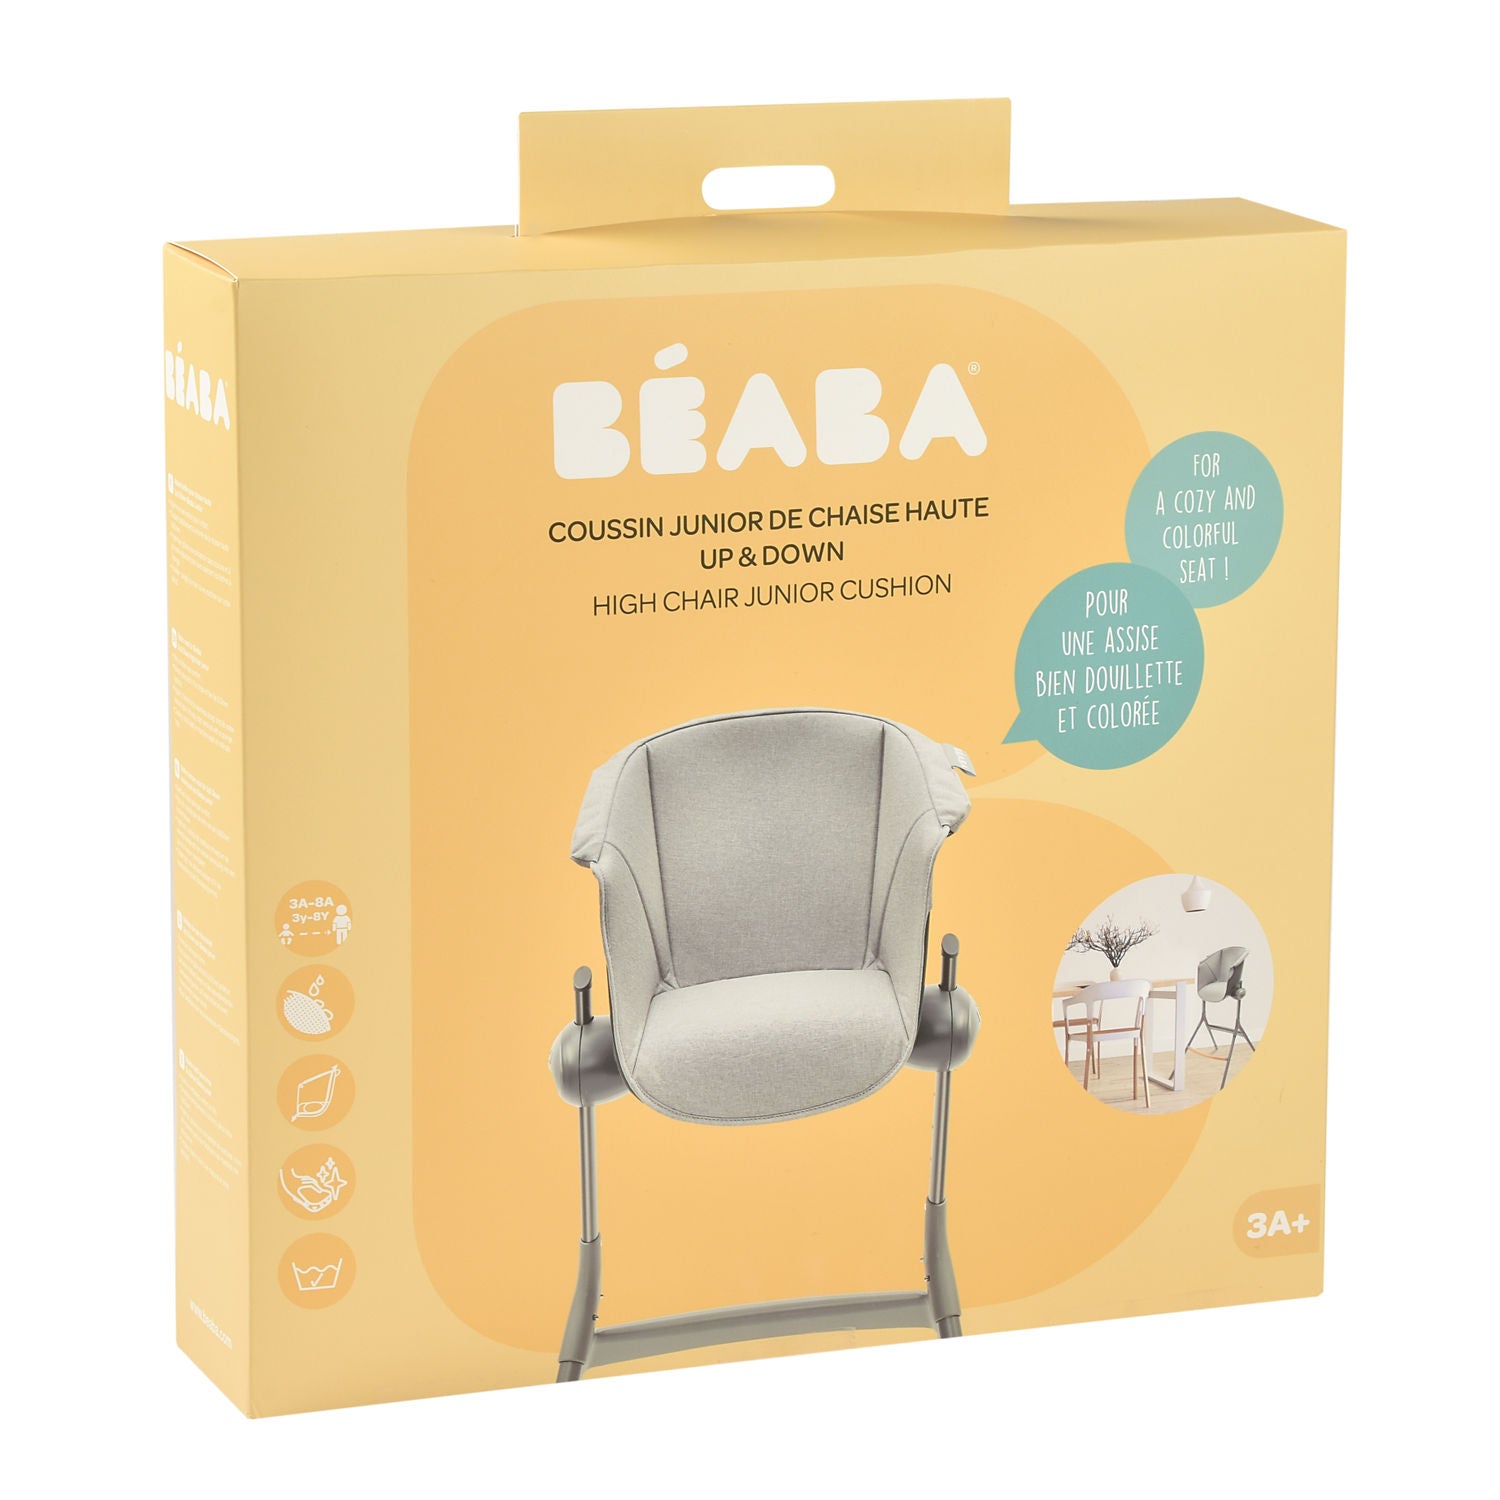 Beaba Up & Down High Chair: Sale Price New Zealand & Australia